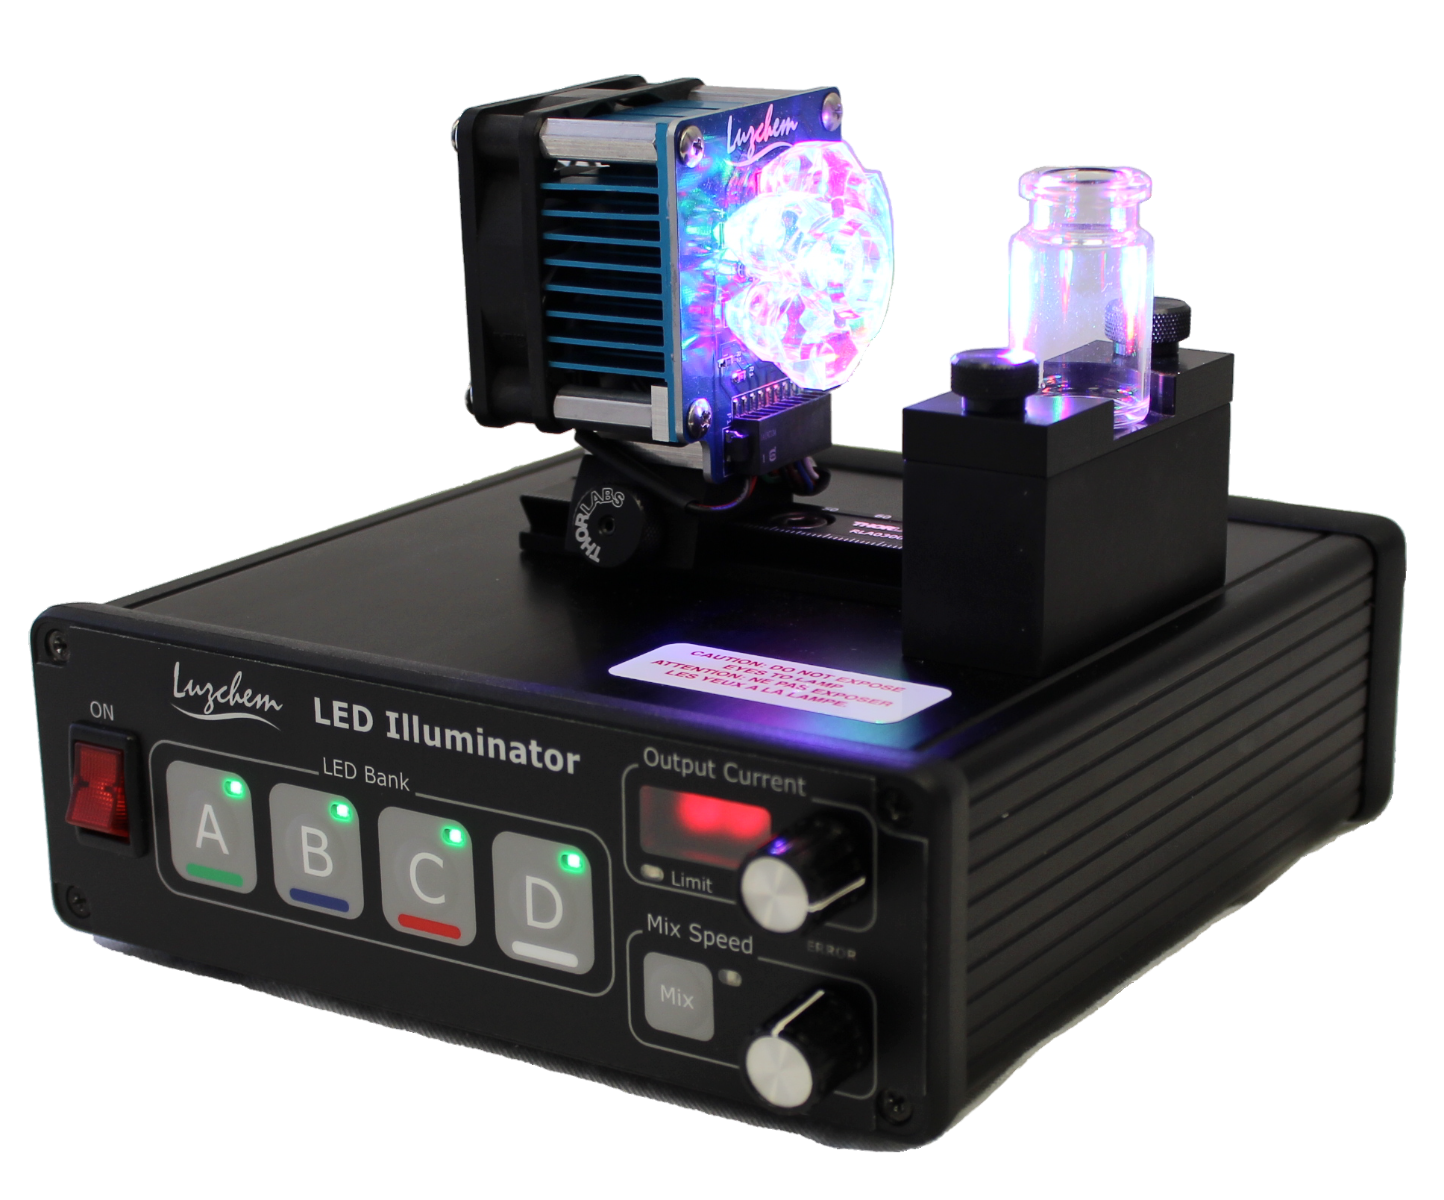 LED Illuminator for Small Samples